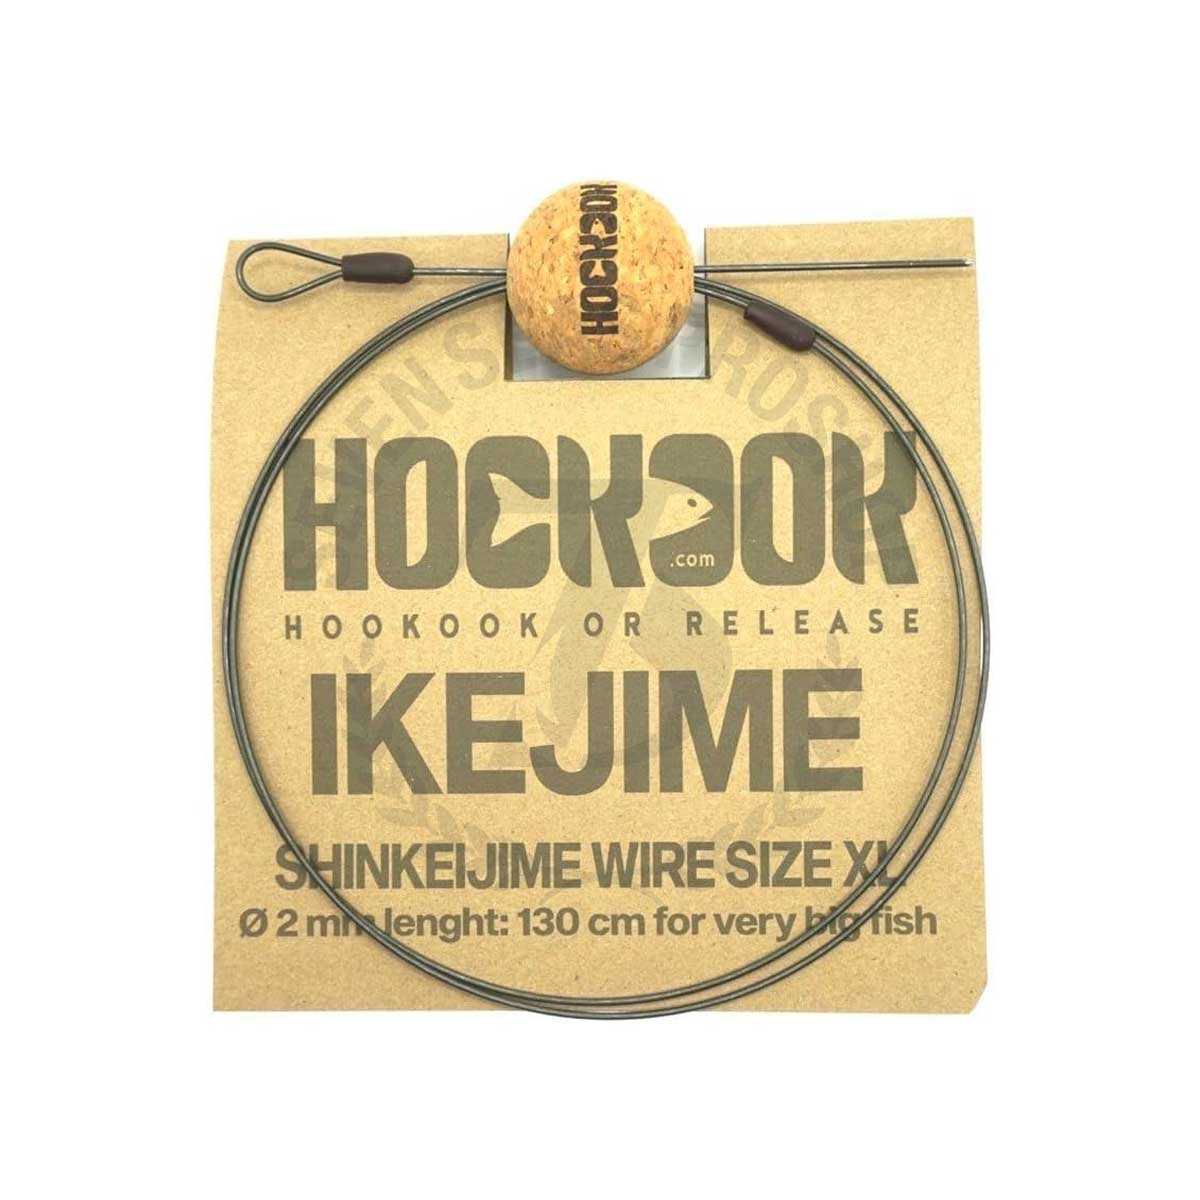 Hookook Tegaki Kit Ikejime #XL*เข็มแทงปลา - 7 SEAS PROSHOP (THAILAND)